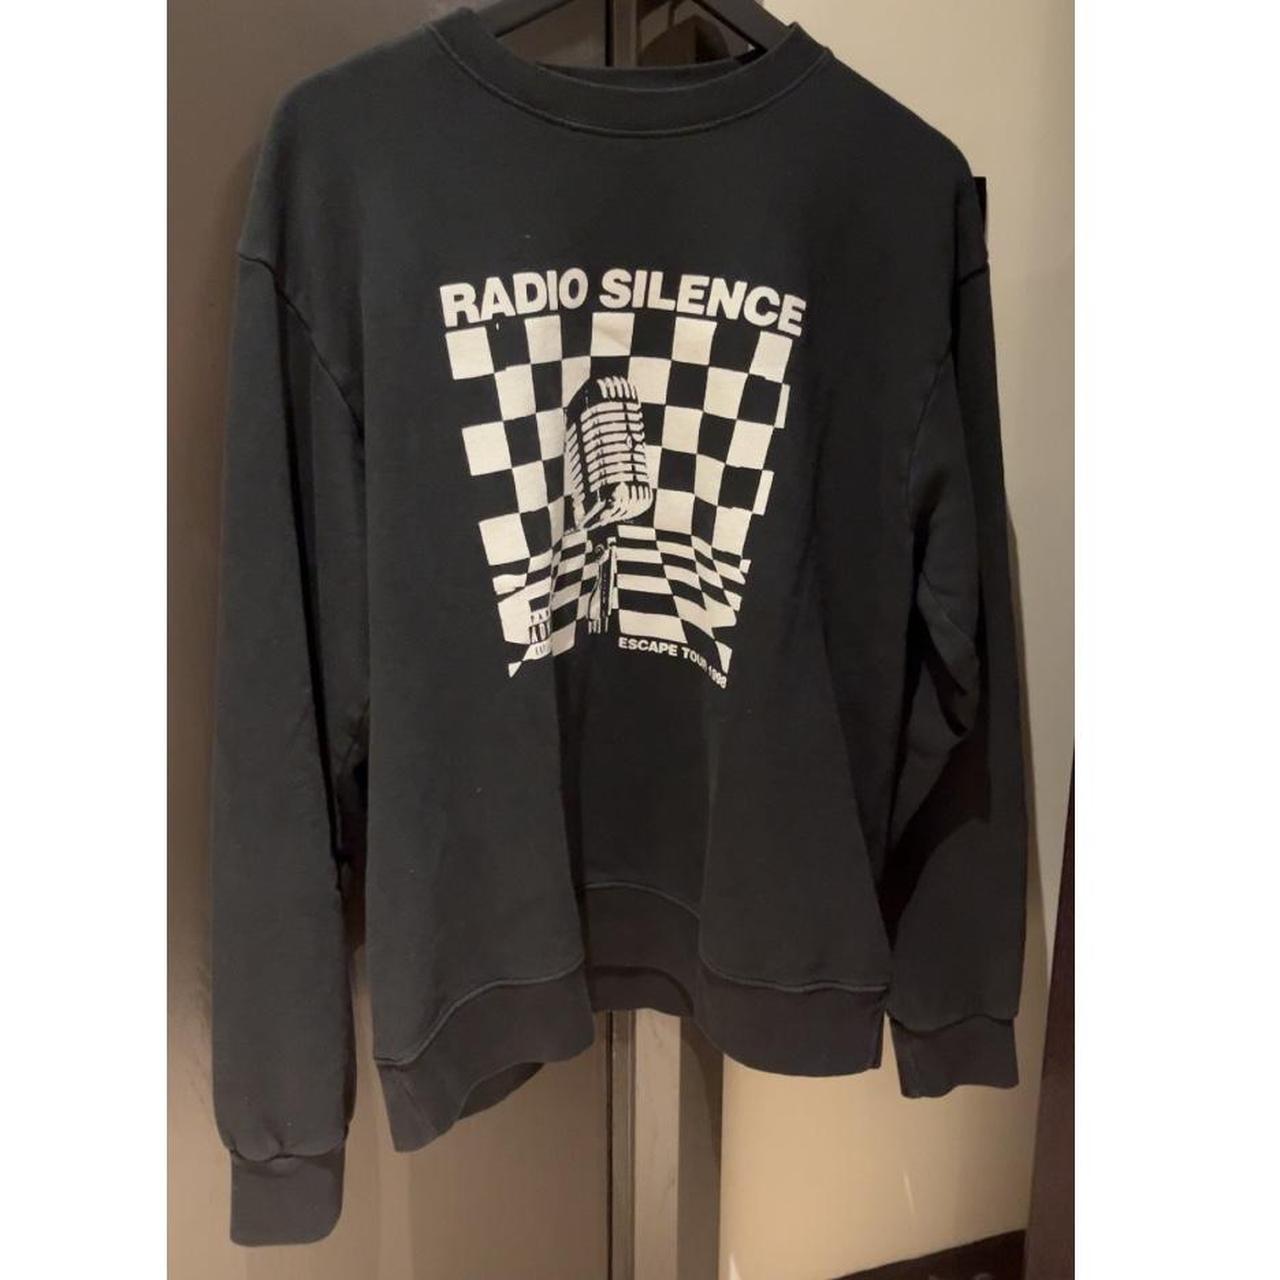 Brandy Melville radio silence brandy hoodie Black - $44 (20% Off Retail) -  From J